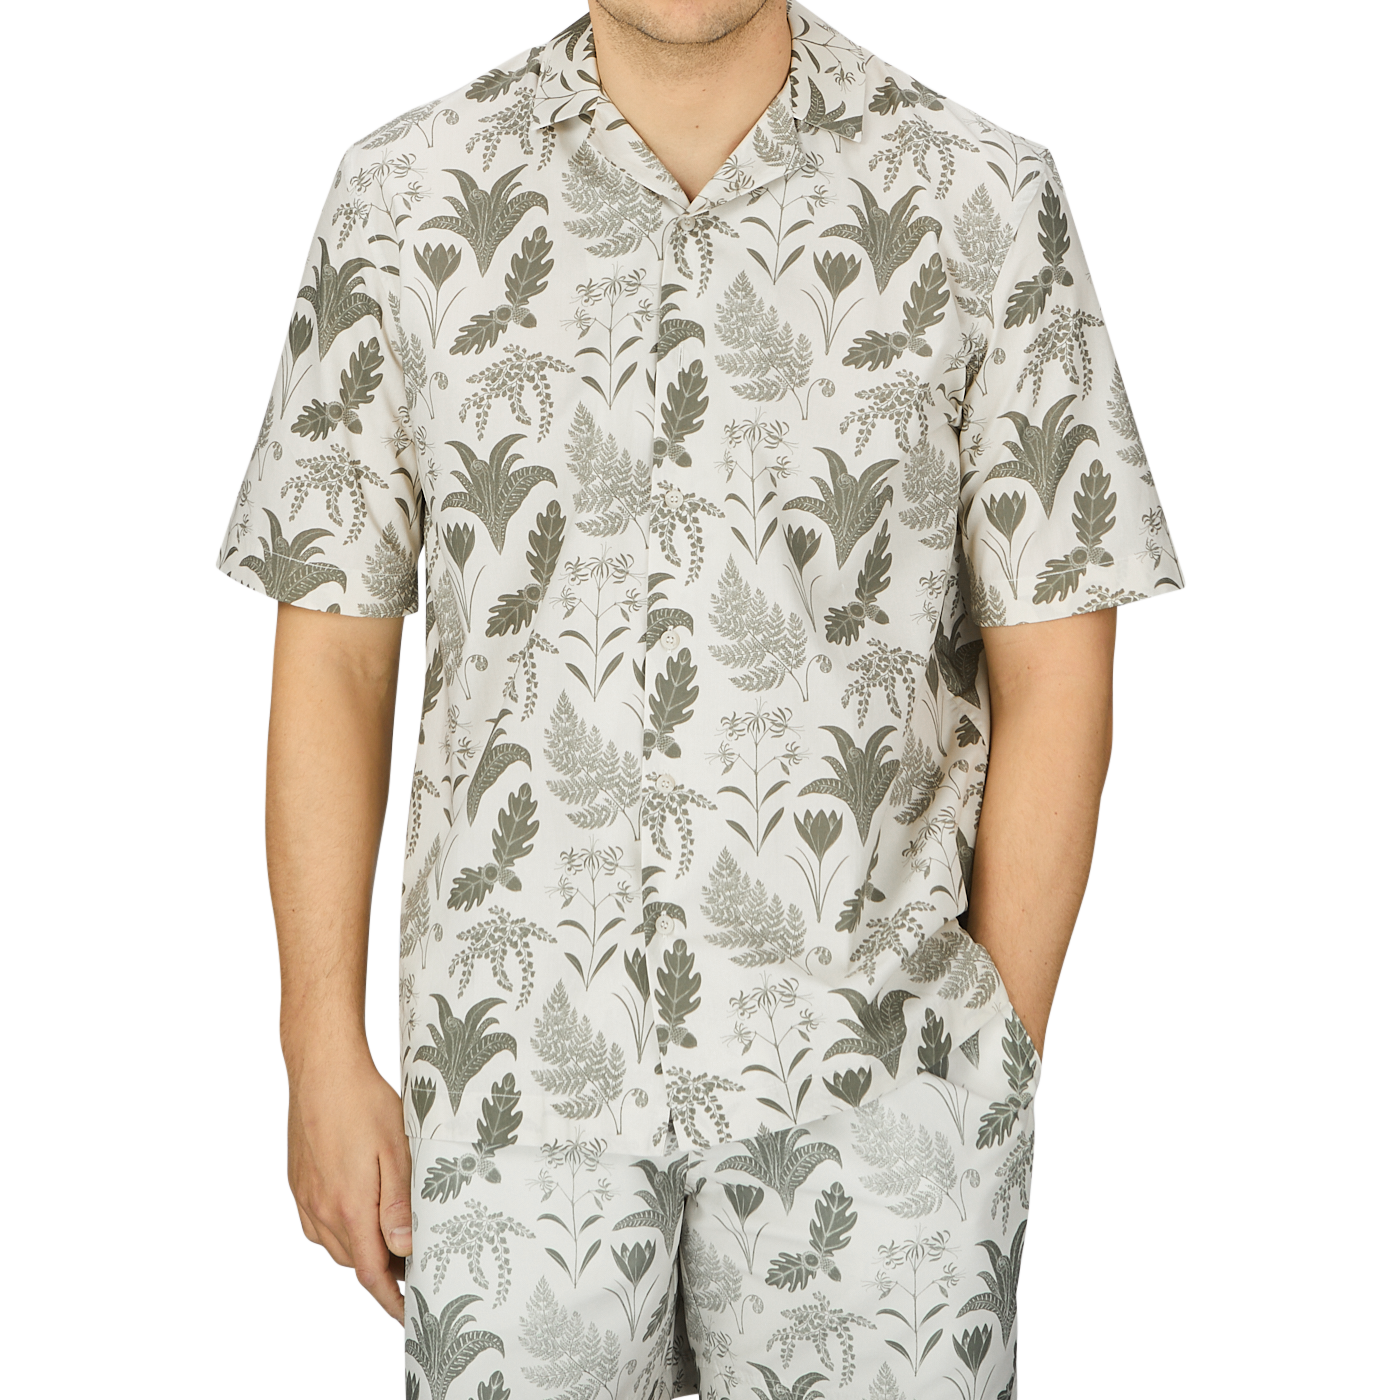 Men's short sleeve Hawaiian print pajamas inspired by botanical artist Katie Scott from Sunspel featuring the Ecru Katie Scott Printed Resort Shirt.